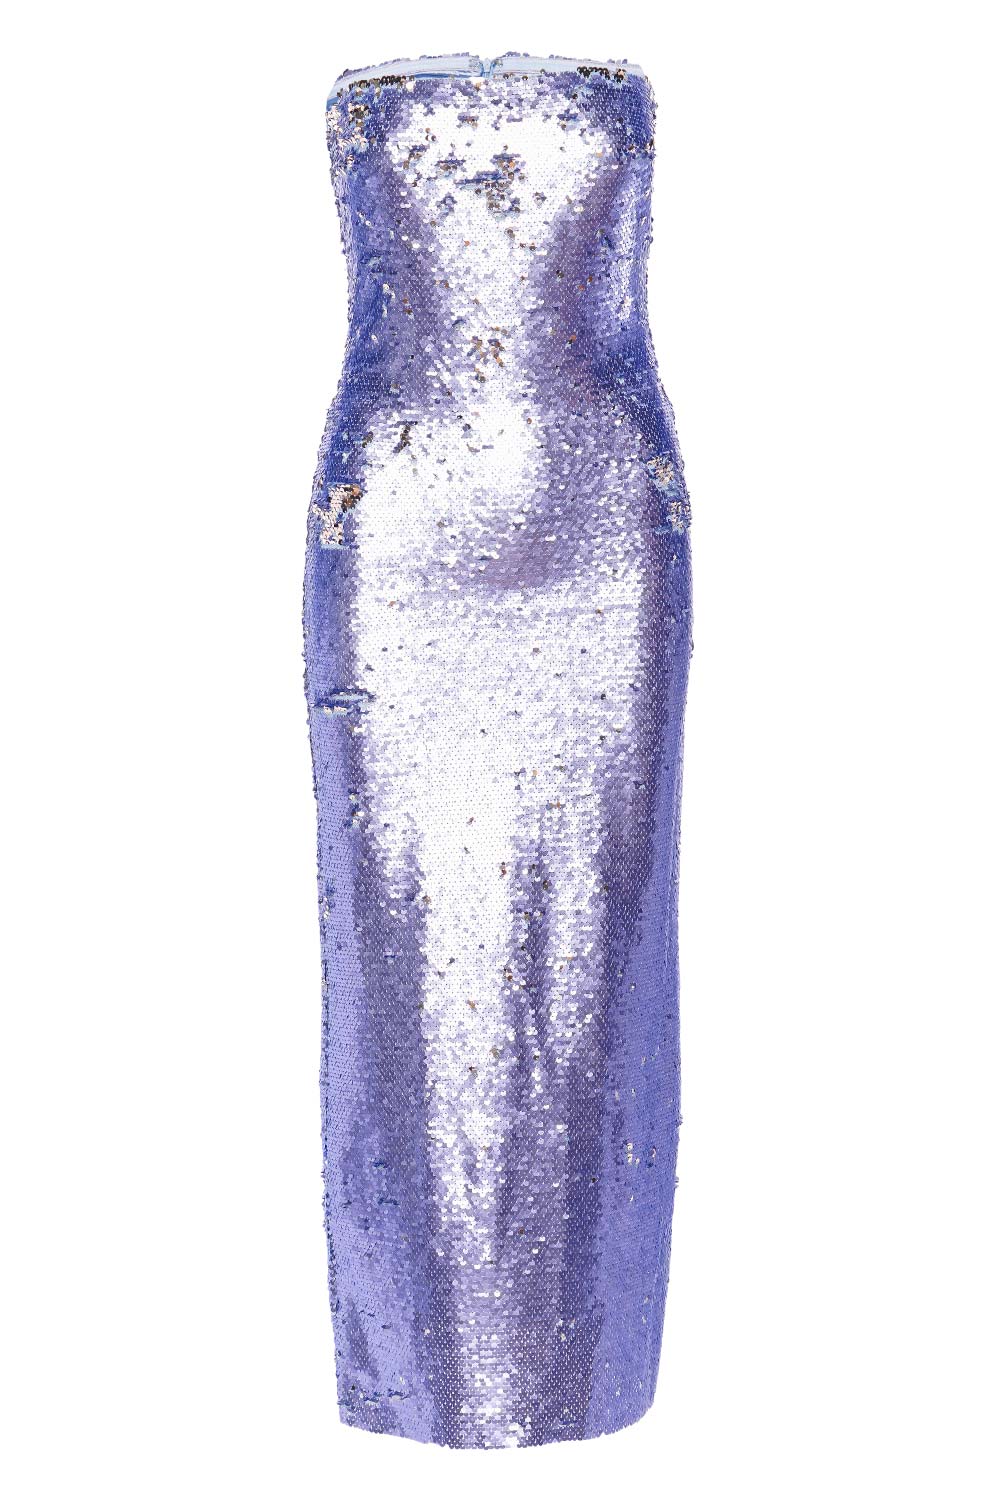 The New Arrivals by Ilkyaz Ozel Phoenix Lavenderite Sequined Midi Dress